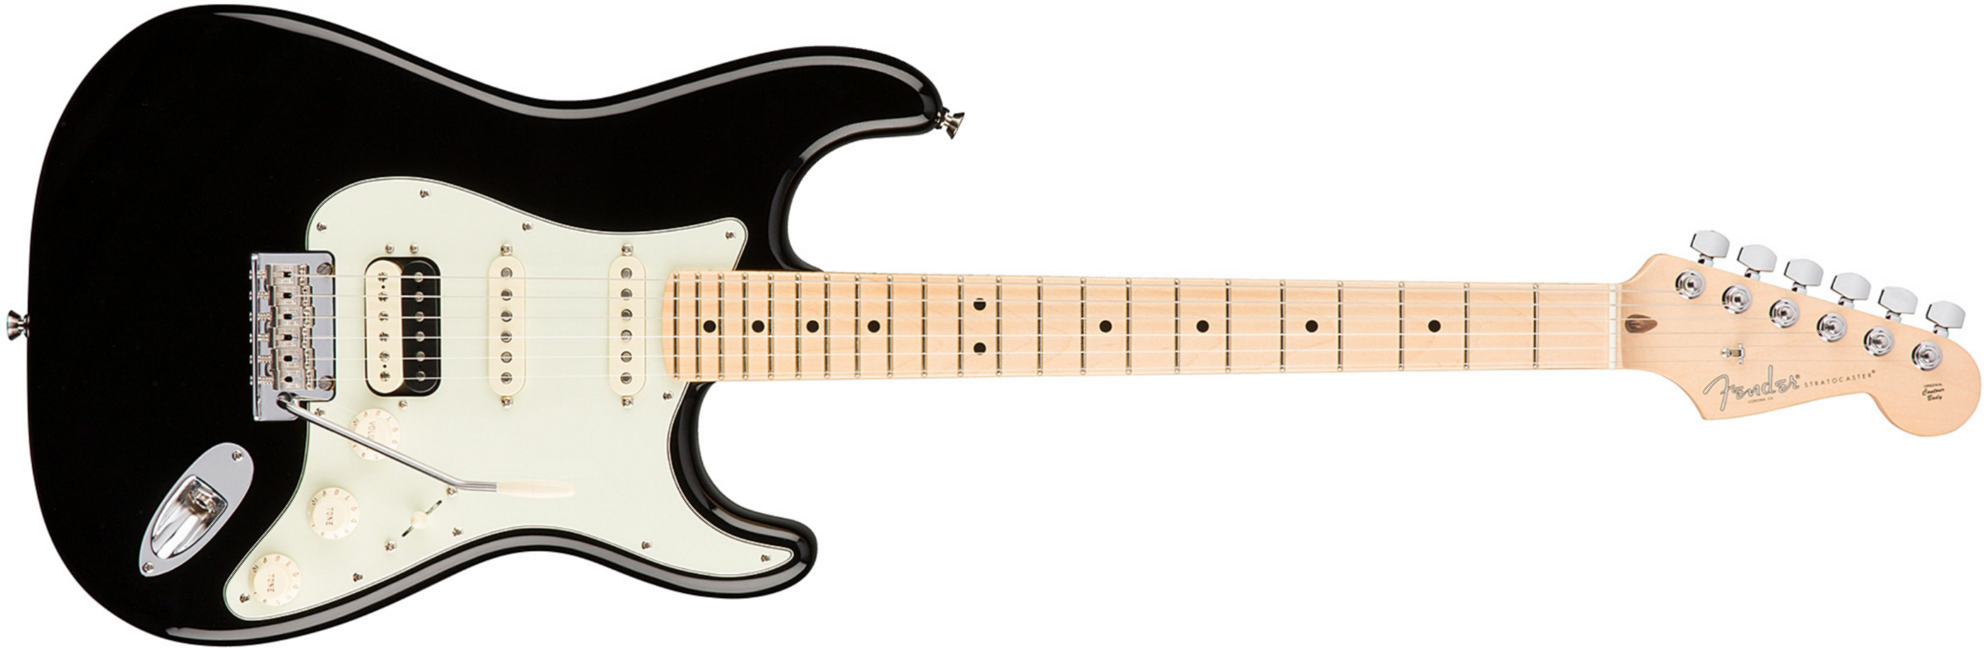 Fender Strat Hss Shawbucker American Professional Usa Mn - Black - Guitarra eléctrica con forma de str. - Main picture